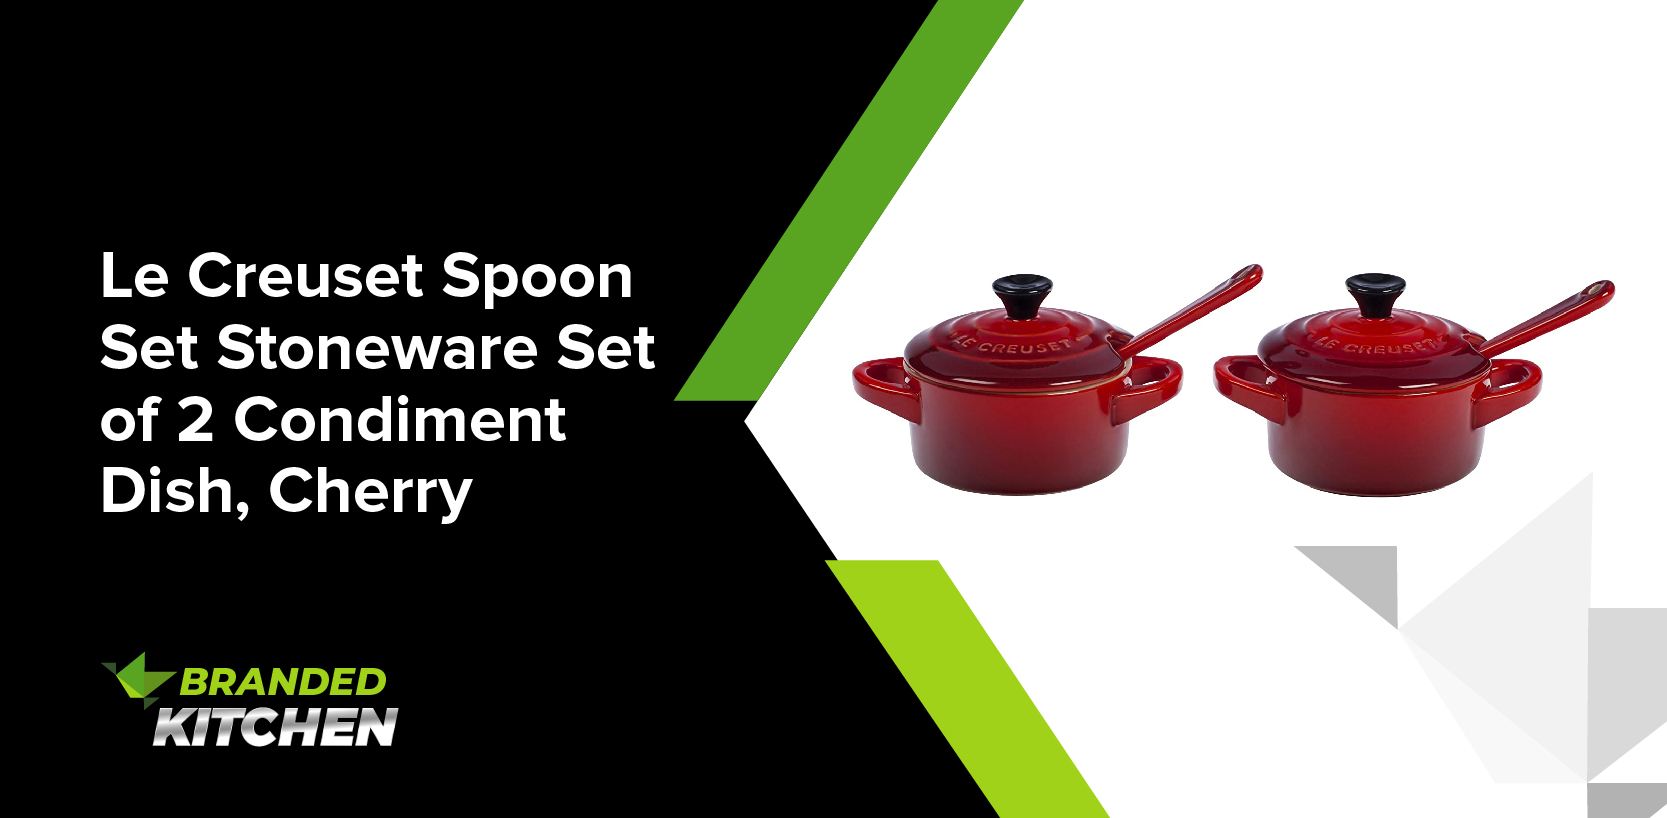 Le Creuset Spoon Set Stoneware Set of 2 Condiment Dish, Cherry